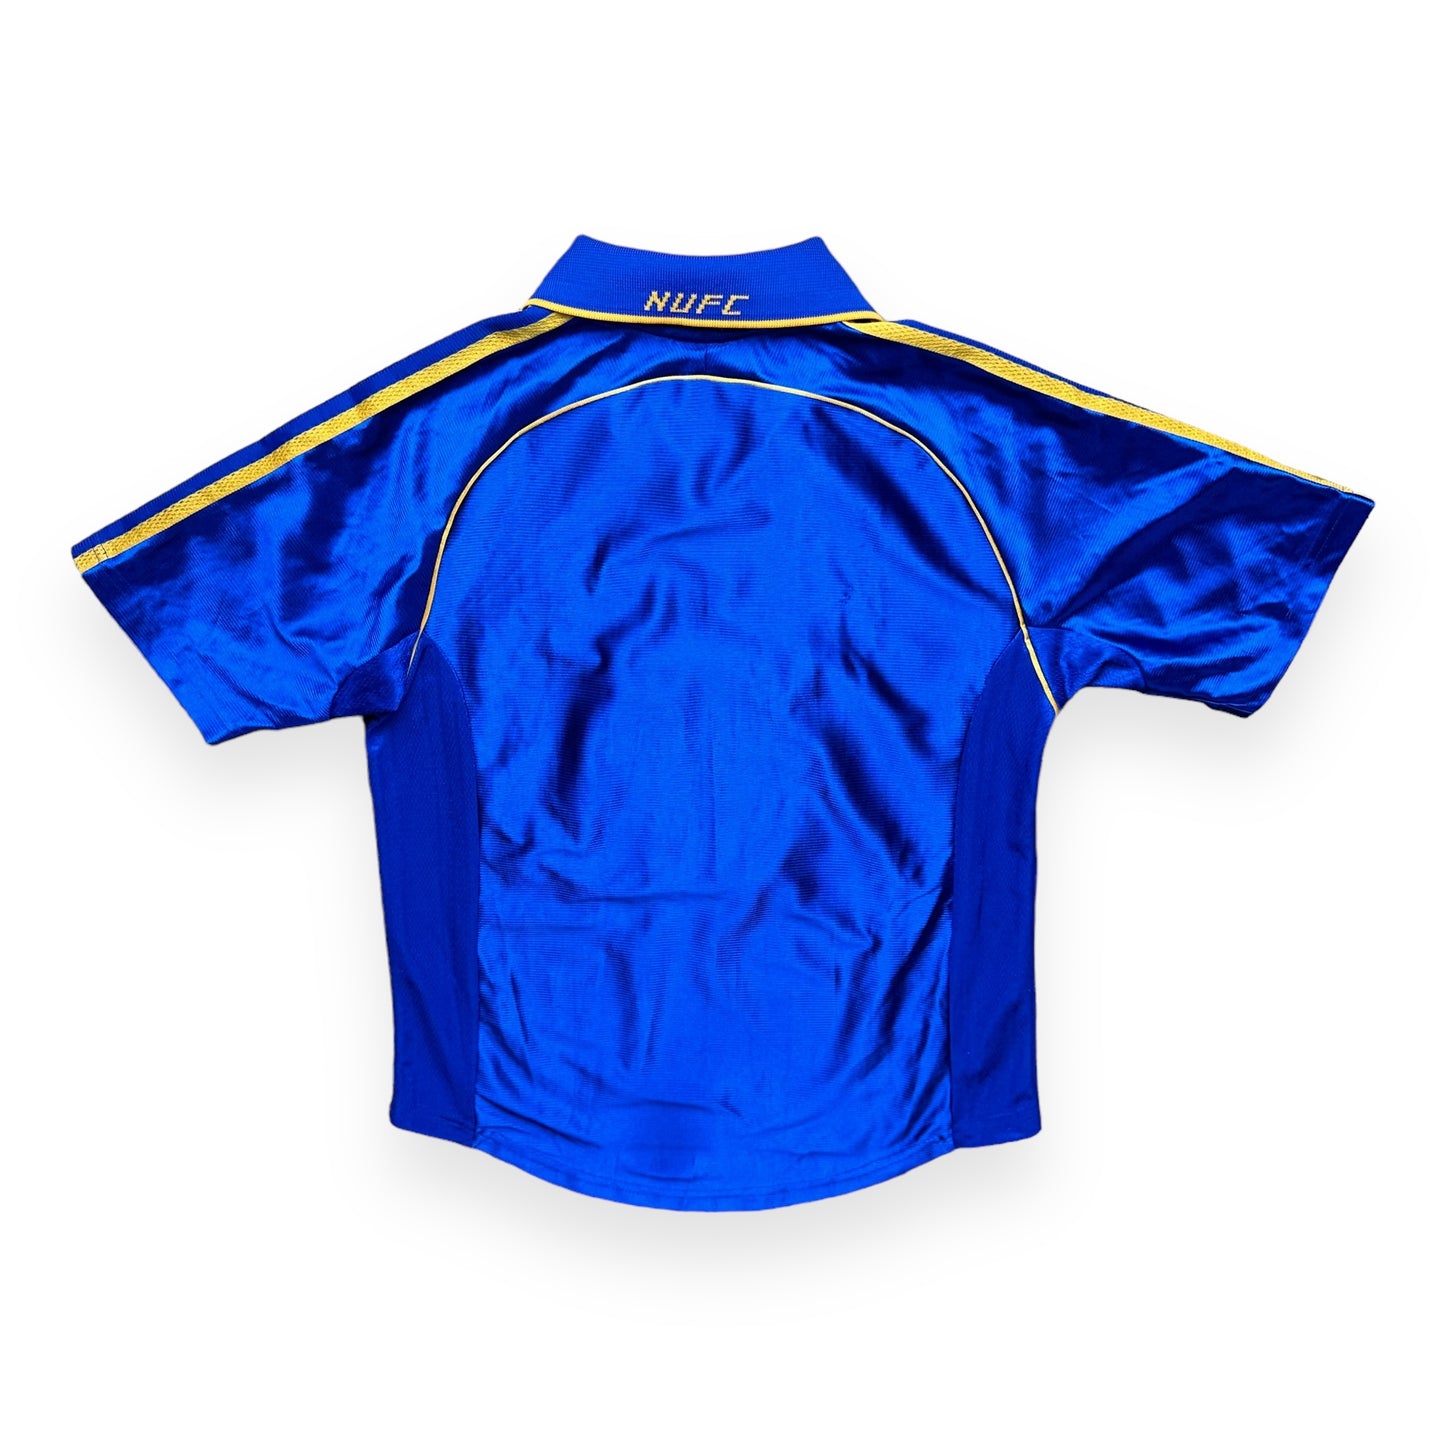 Newcastle 1998-99 Away Shirt (Youth)